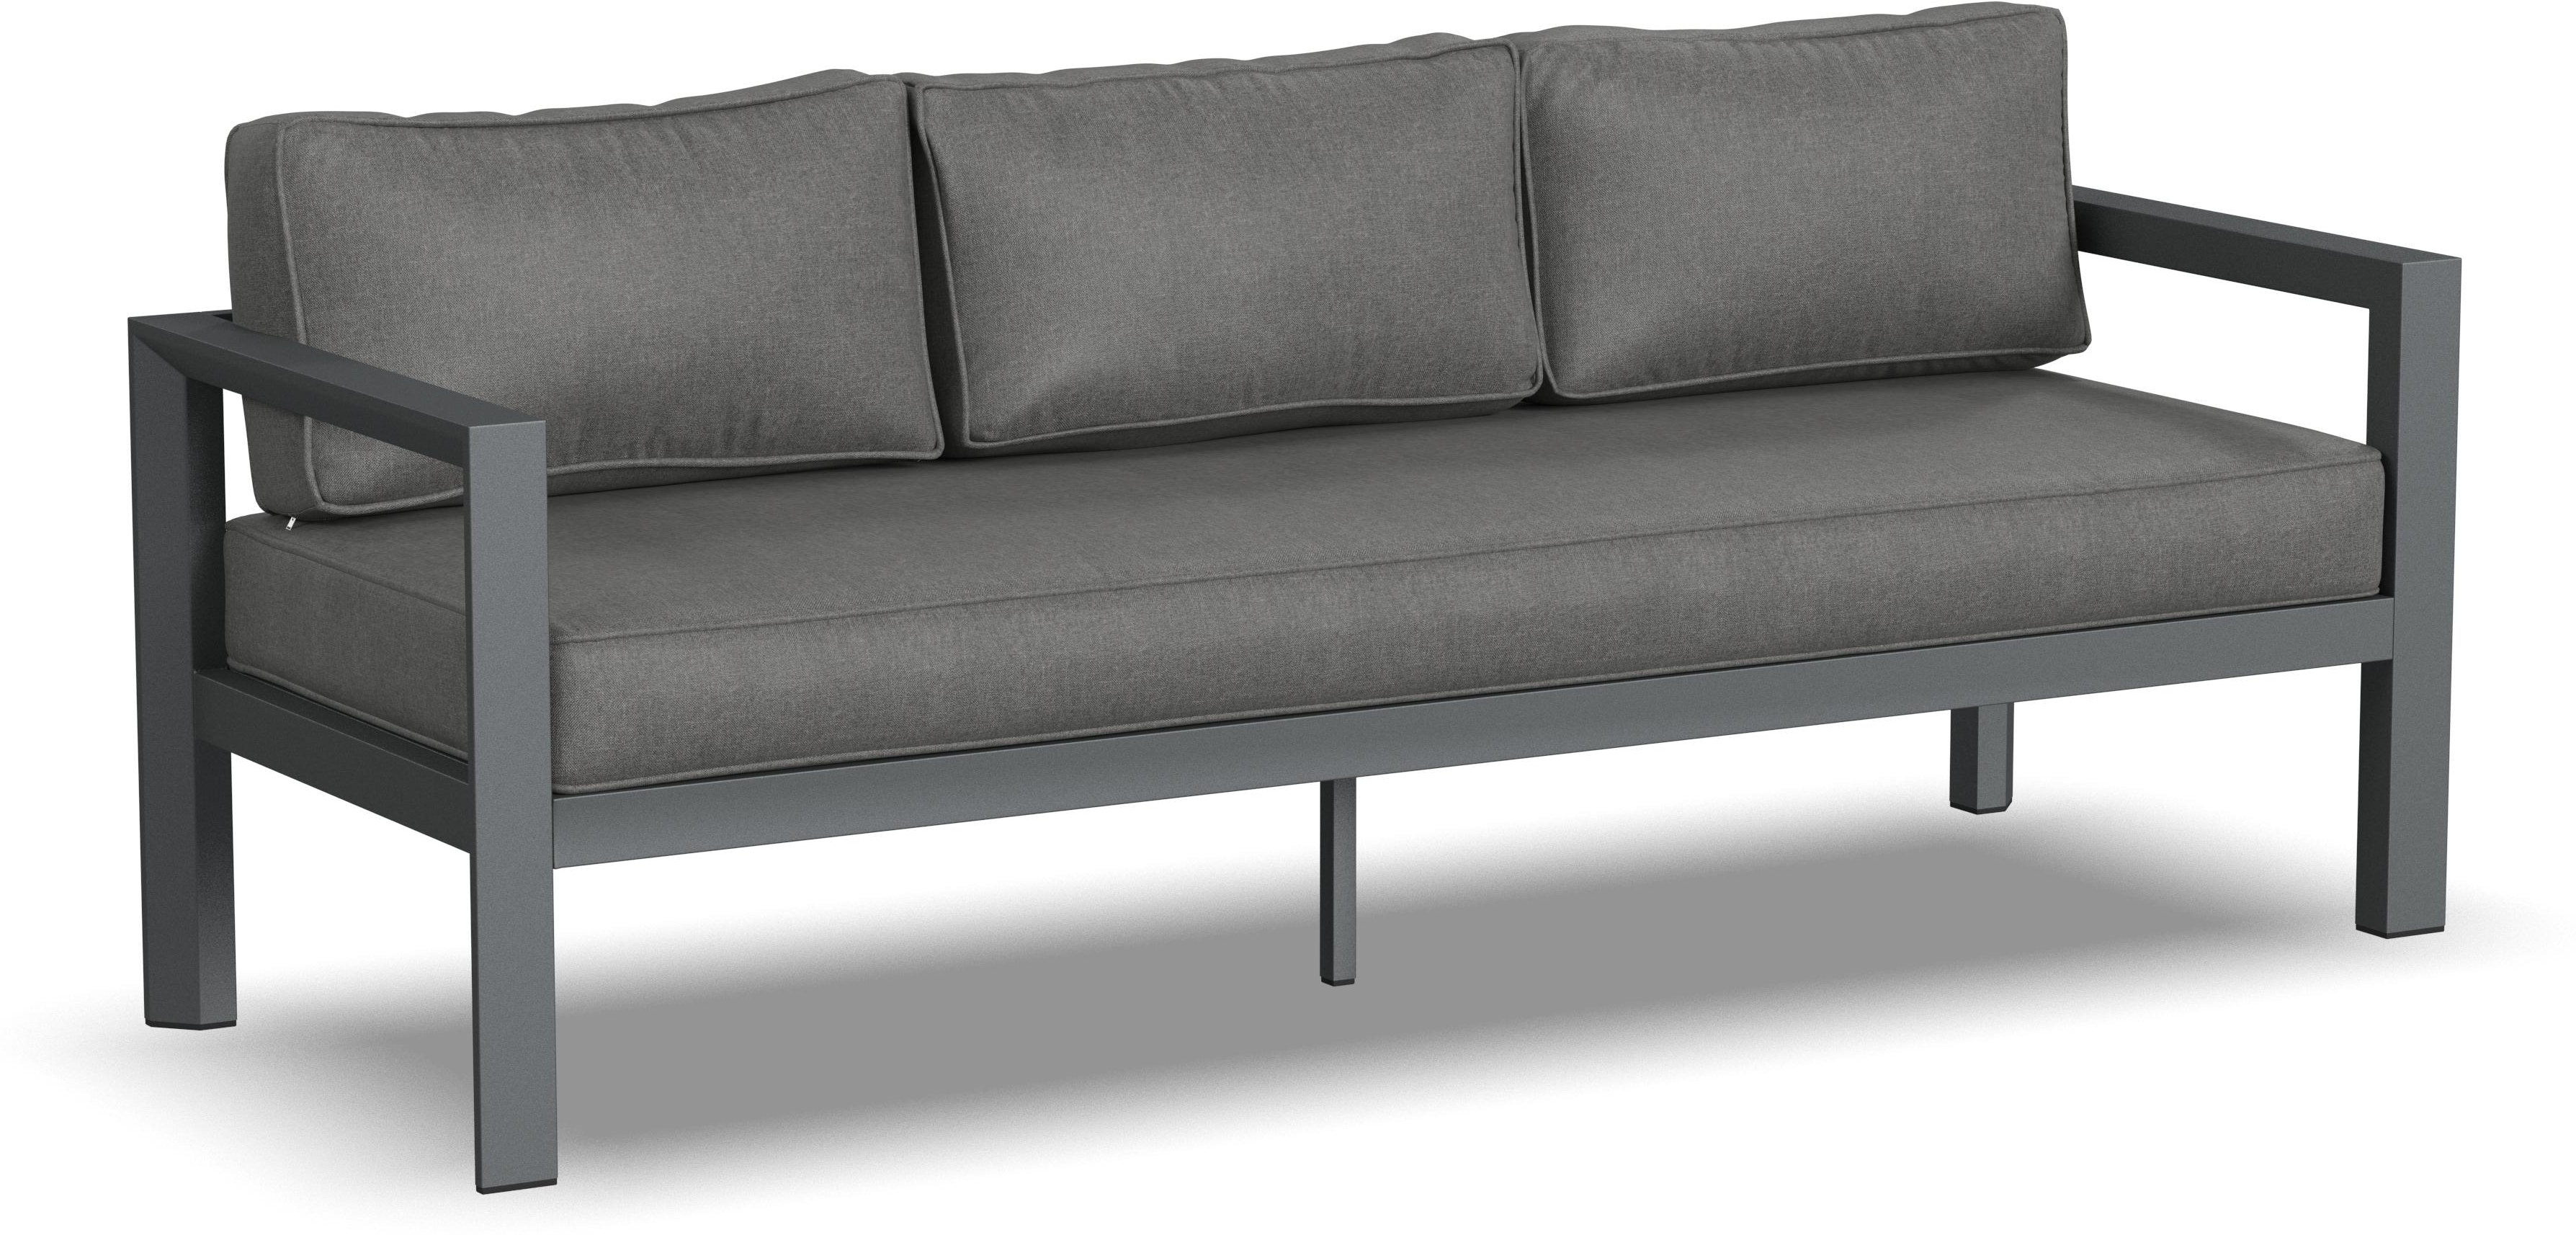 Outdoor Aluminum Sofa 6730-30 - Furniture Market Austin, TX